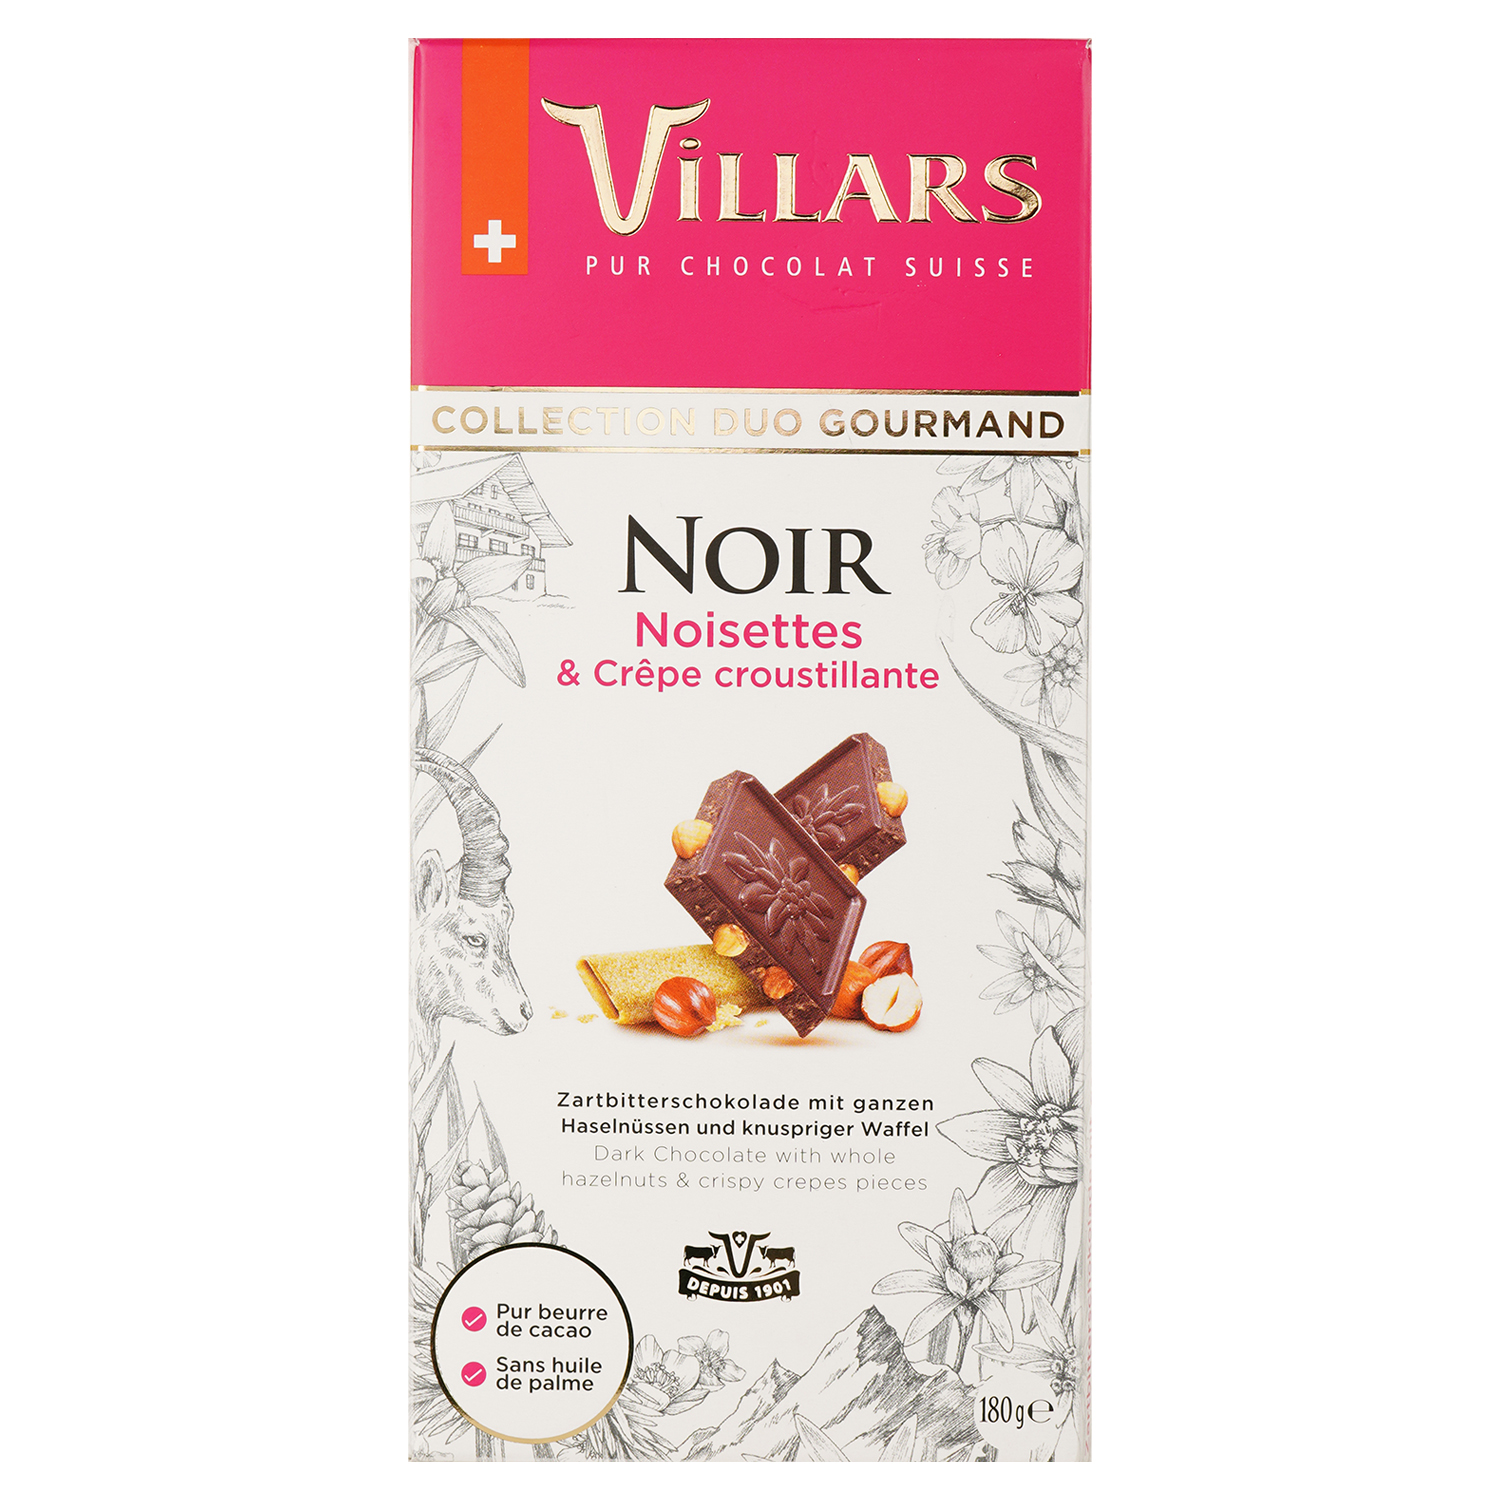 Шоколад чорний Villars Collection Duo Gourmand Noir Noisettes & Crepe Croustillante з фундуком та шматочками печива 180 г - фото 1